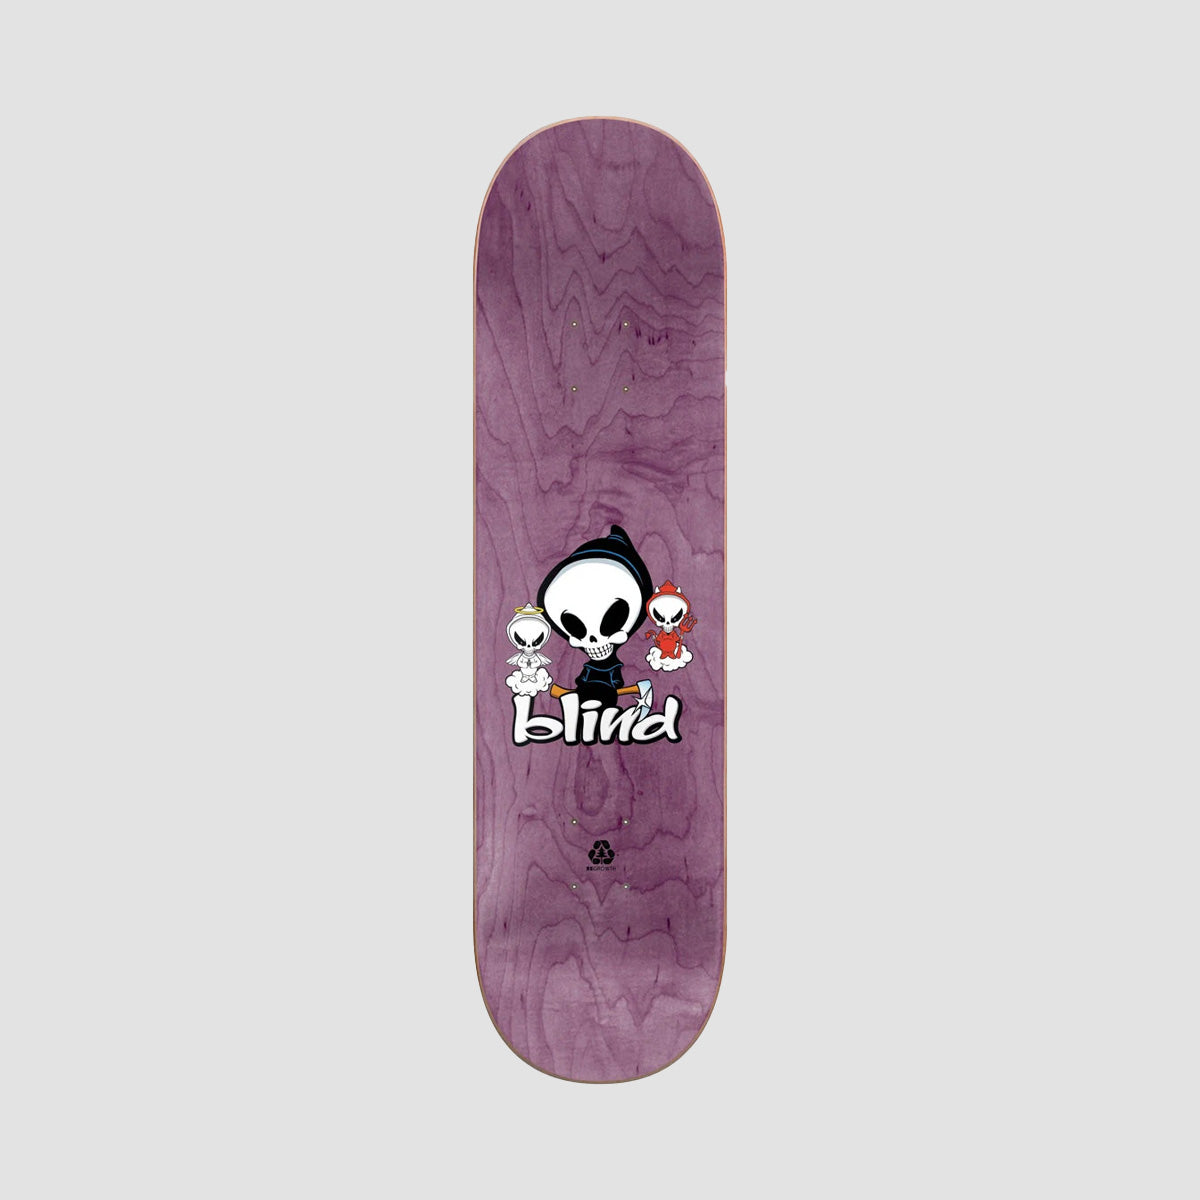 Blind Reaper Vs Reaper R7 Skateboard Deck Tj Rogers - 8.375"